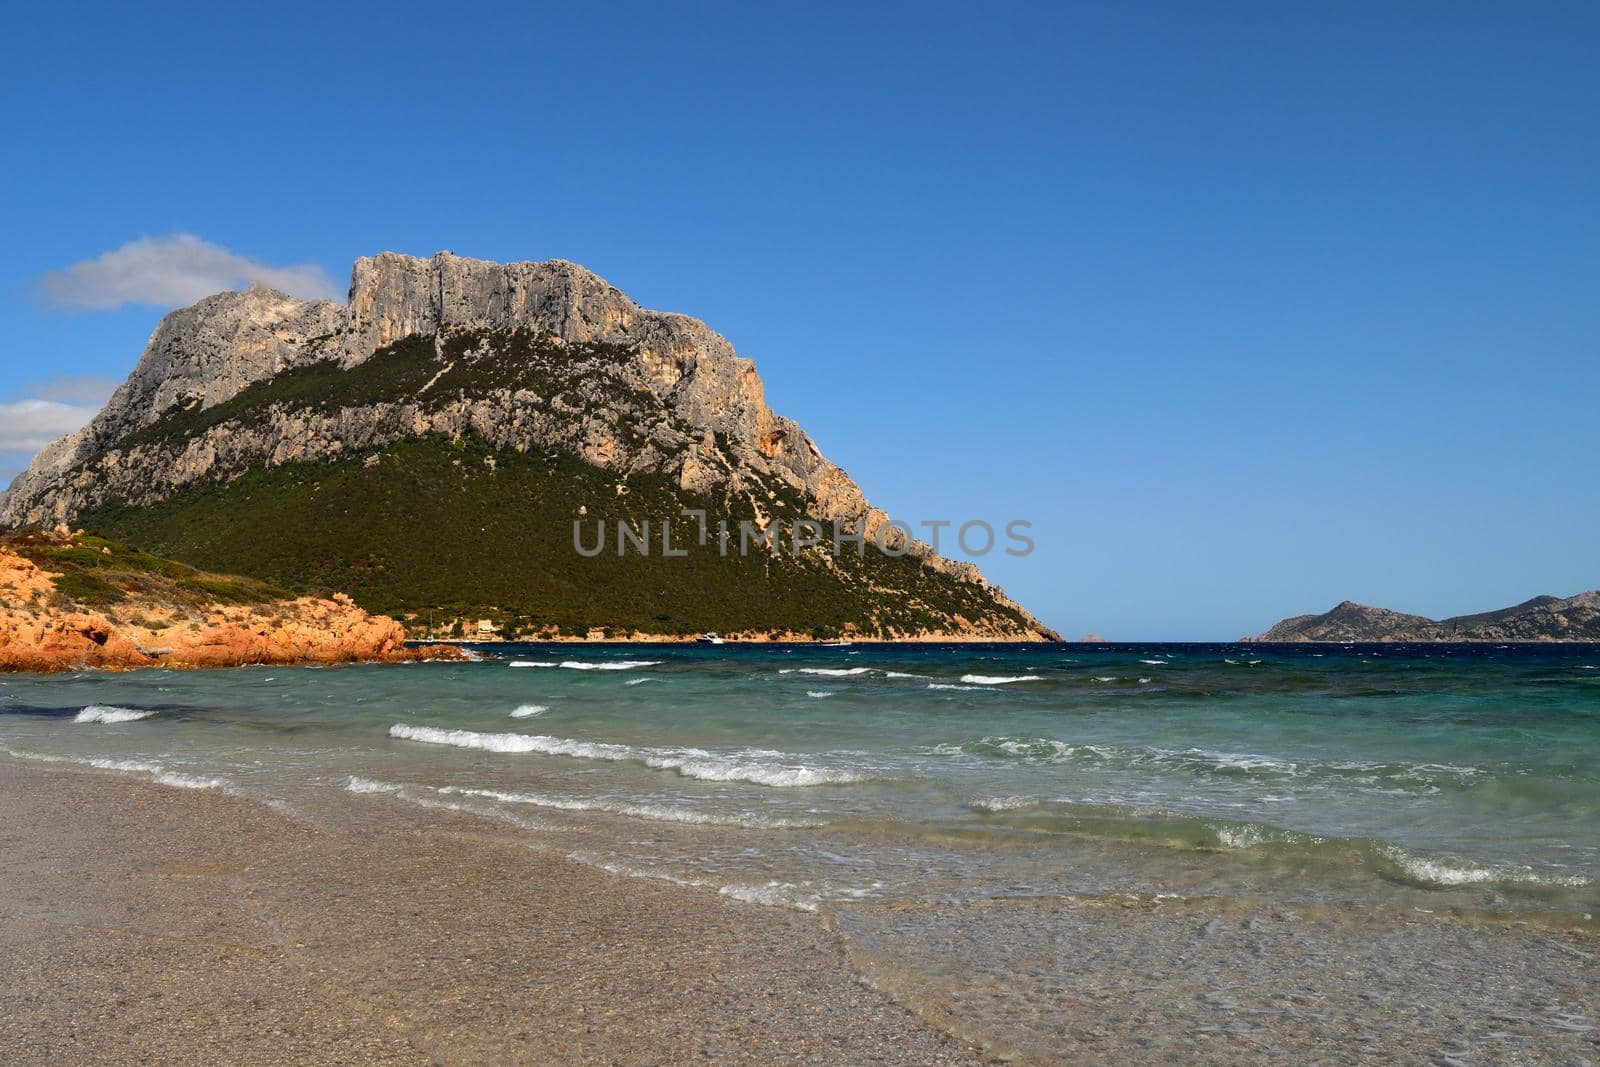 A wonderful view of Tavolara island, Sardinia, Italy